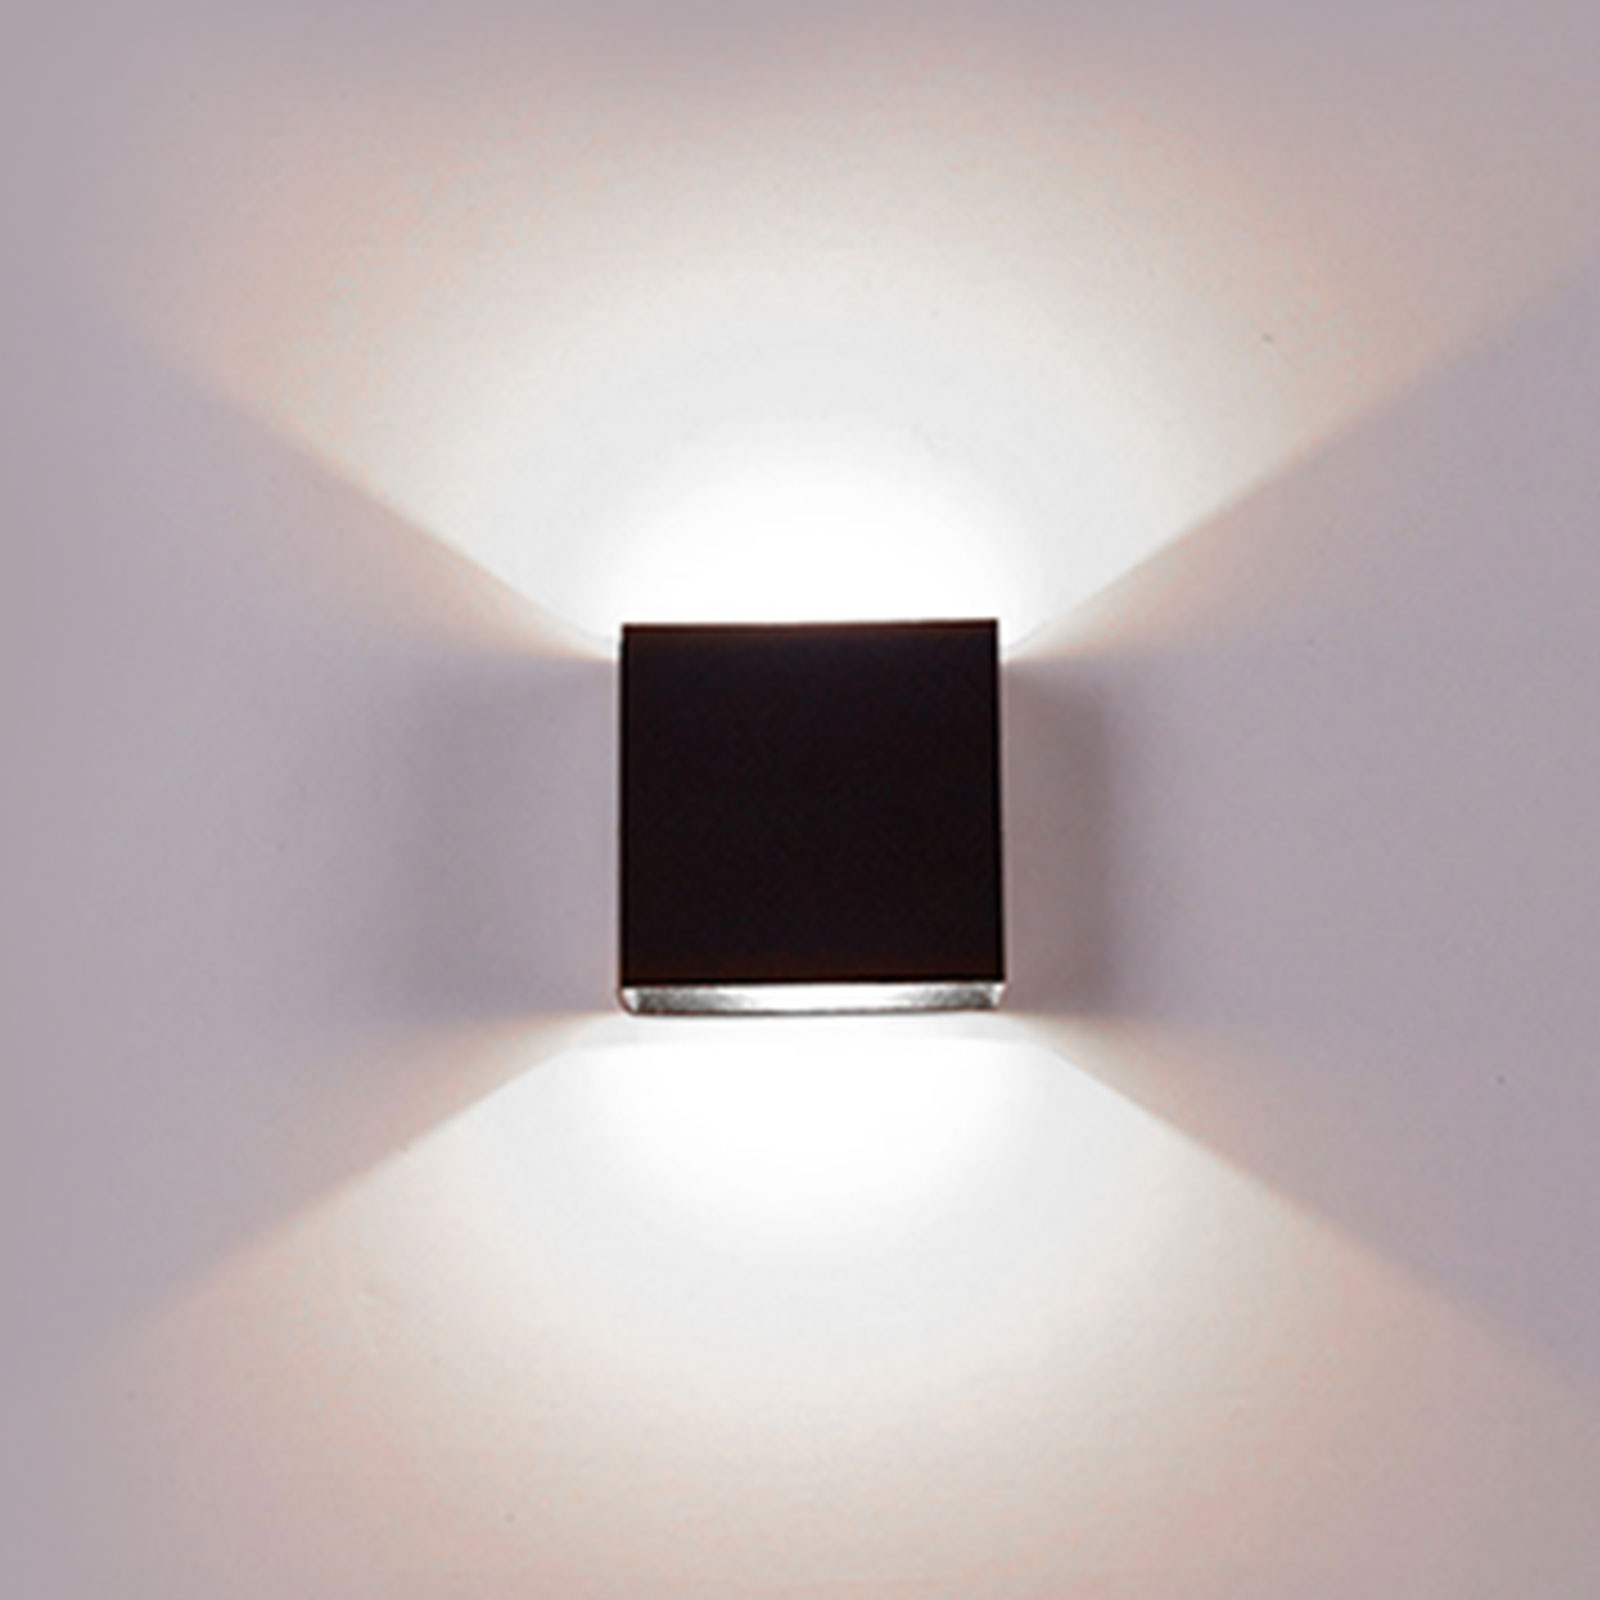 LED Wall Light Up Down Indoor Outdoor Sconce Lighting Lamp Fixture KTV Bar Decor 